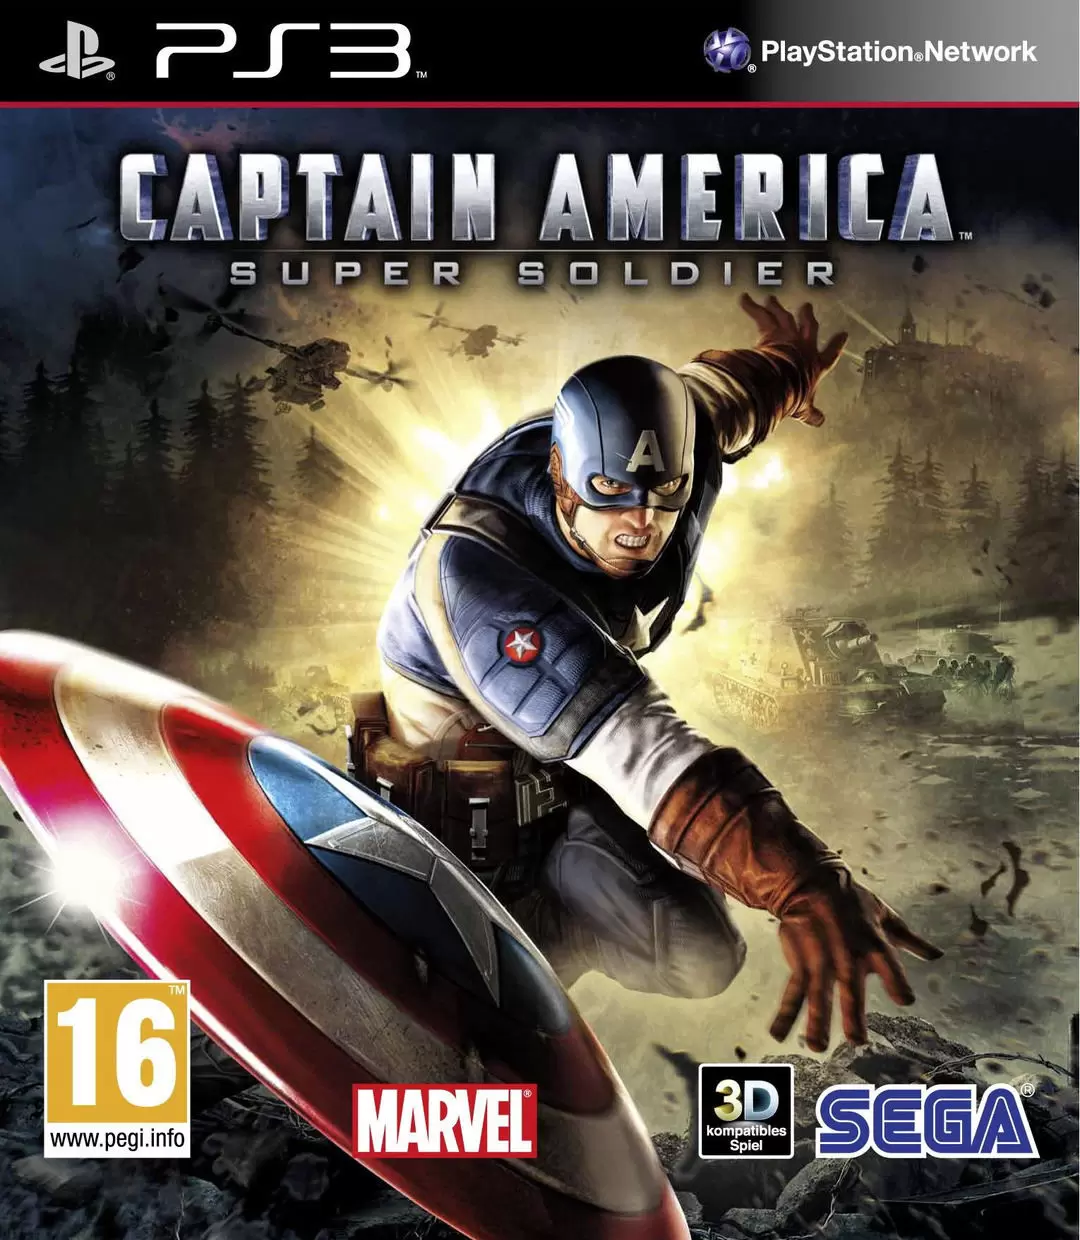 PS3 Games - Captain America: Super Soldier